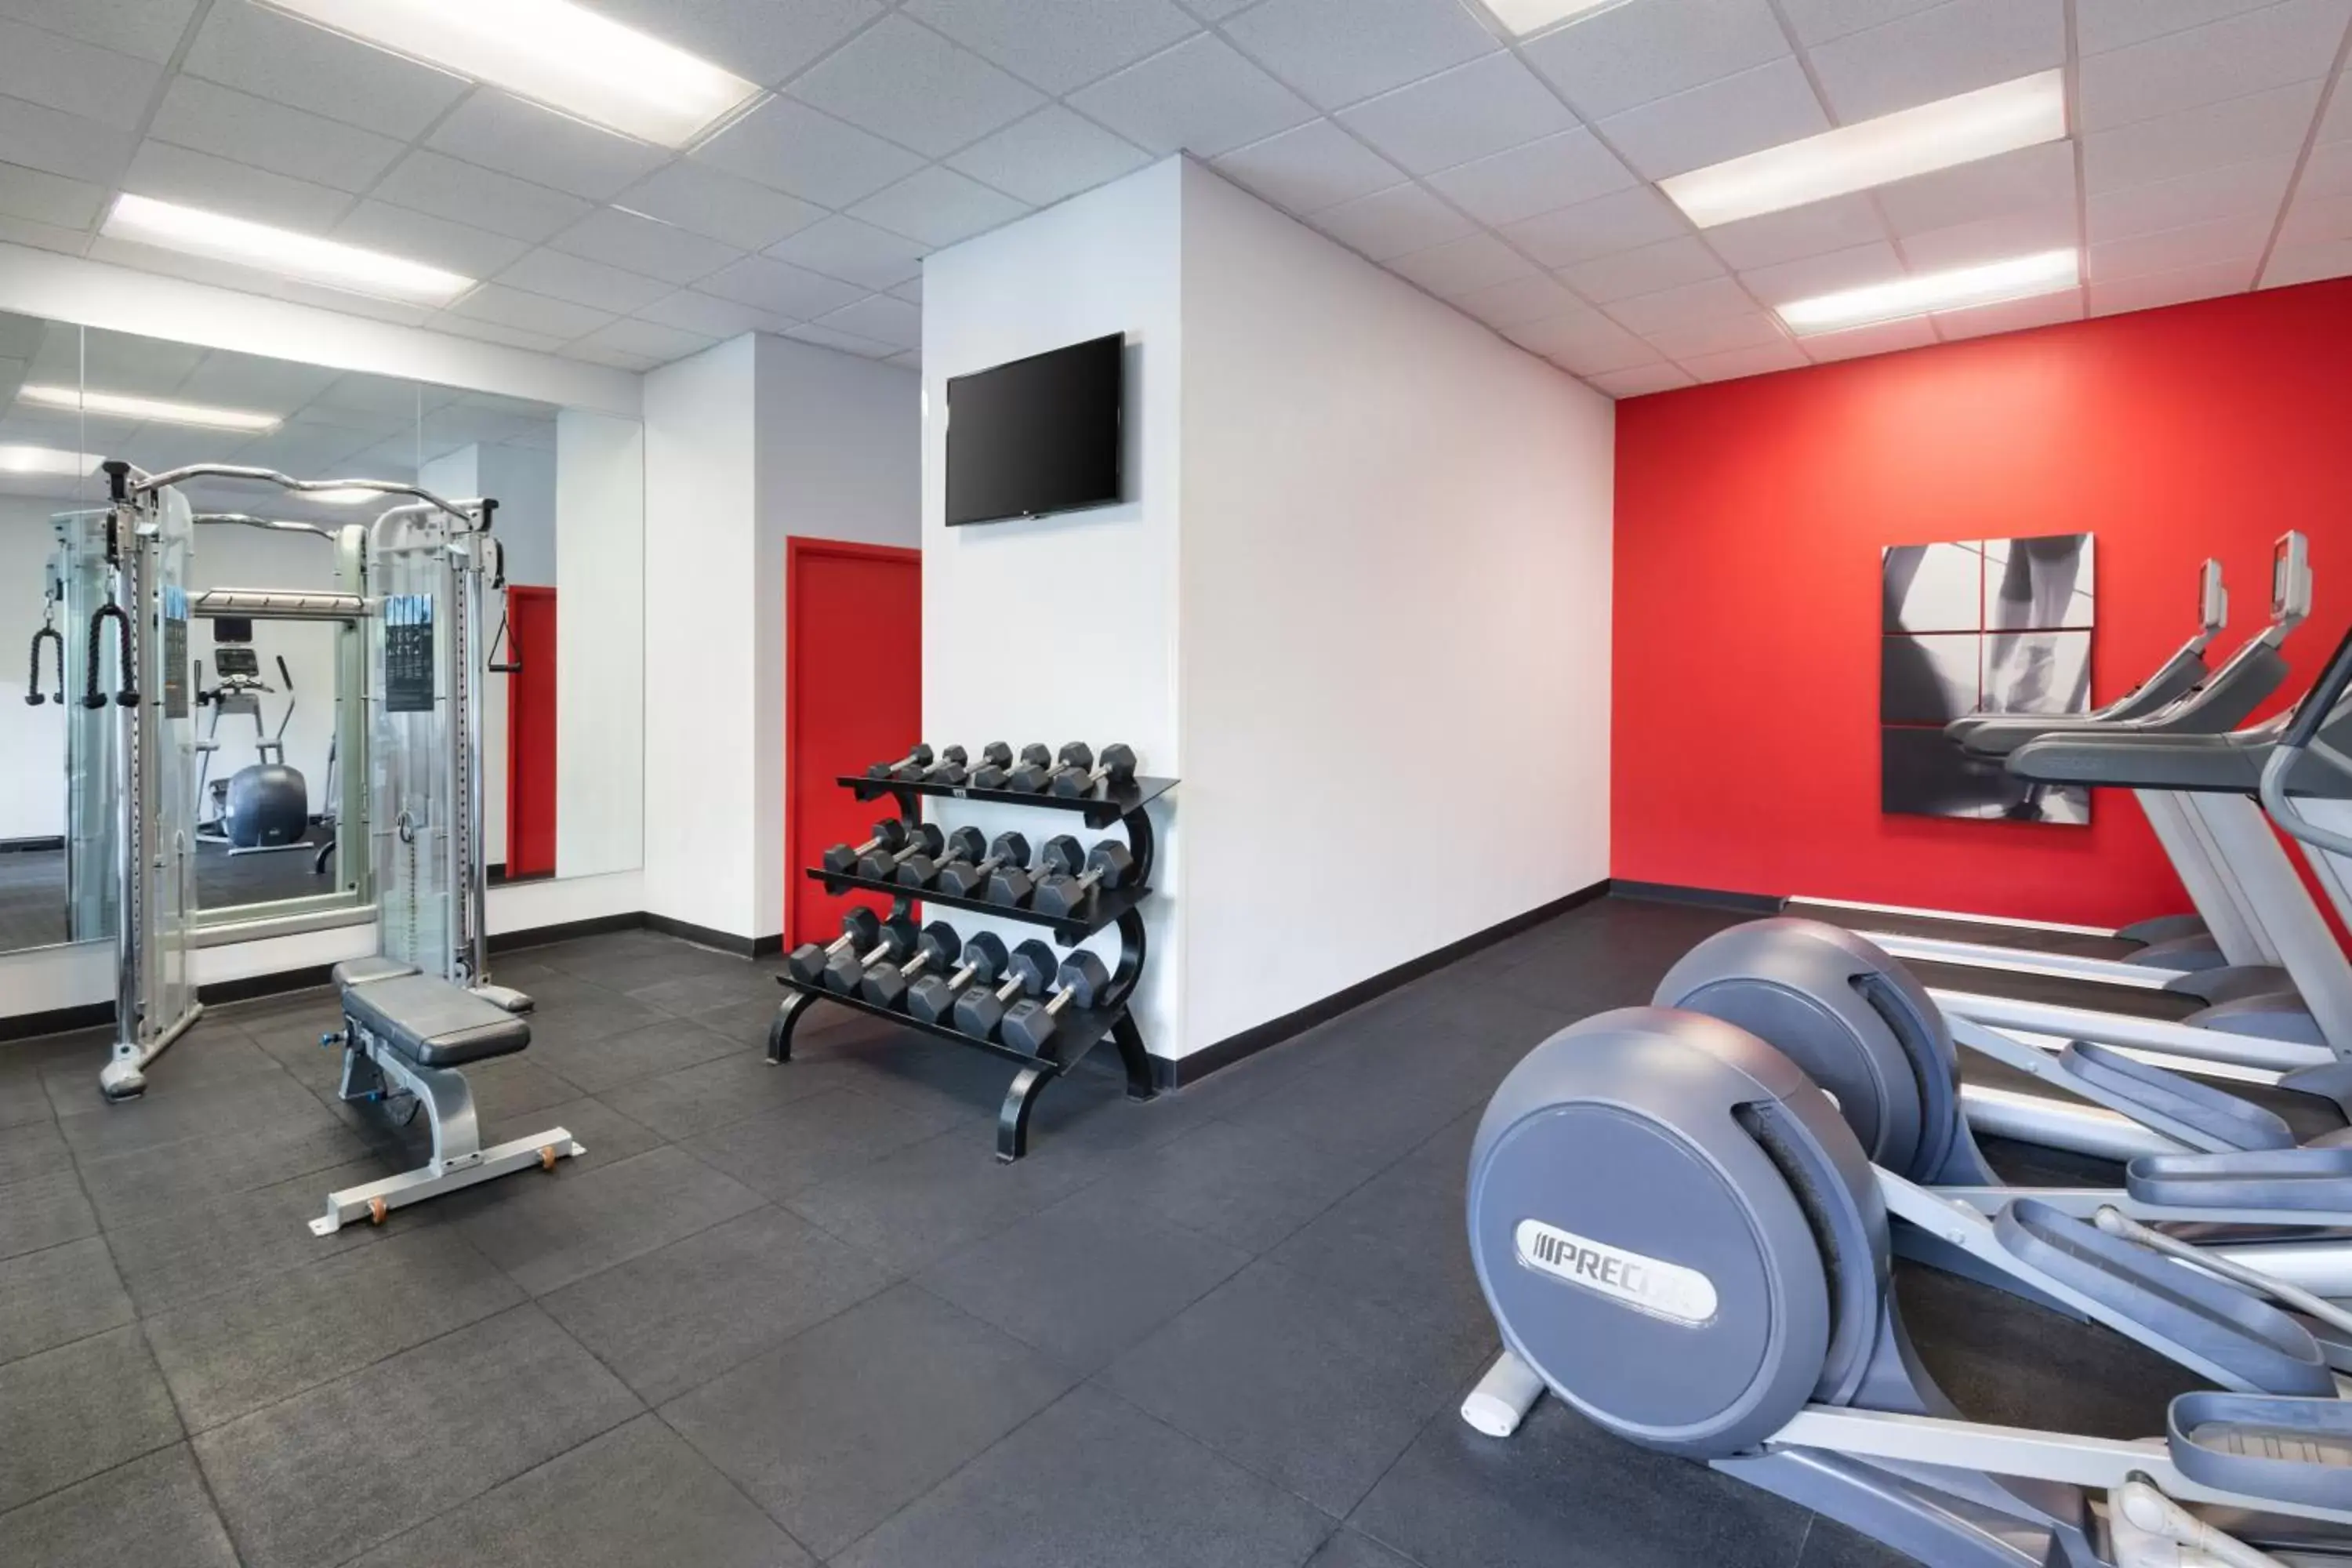 Fitness centre/facilities, Fitness Center/Facilities in Radisson Hotel Nashville Airport